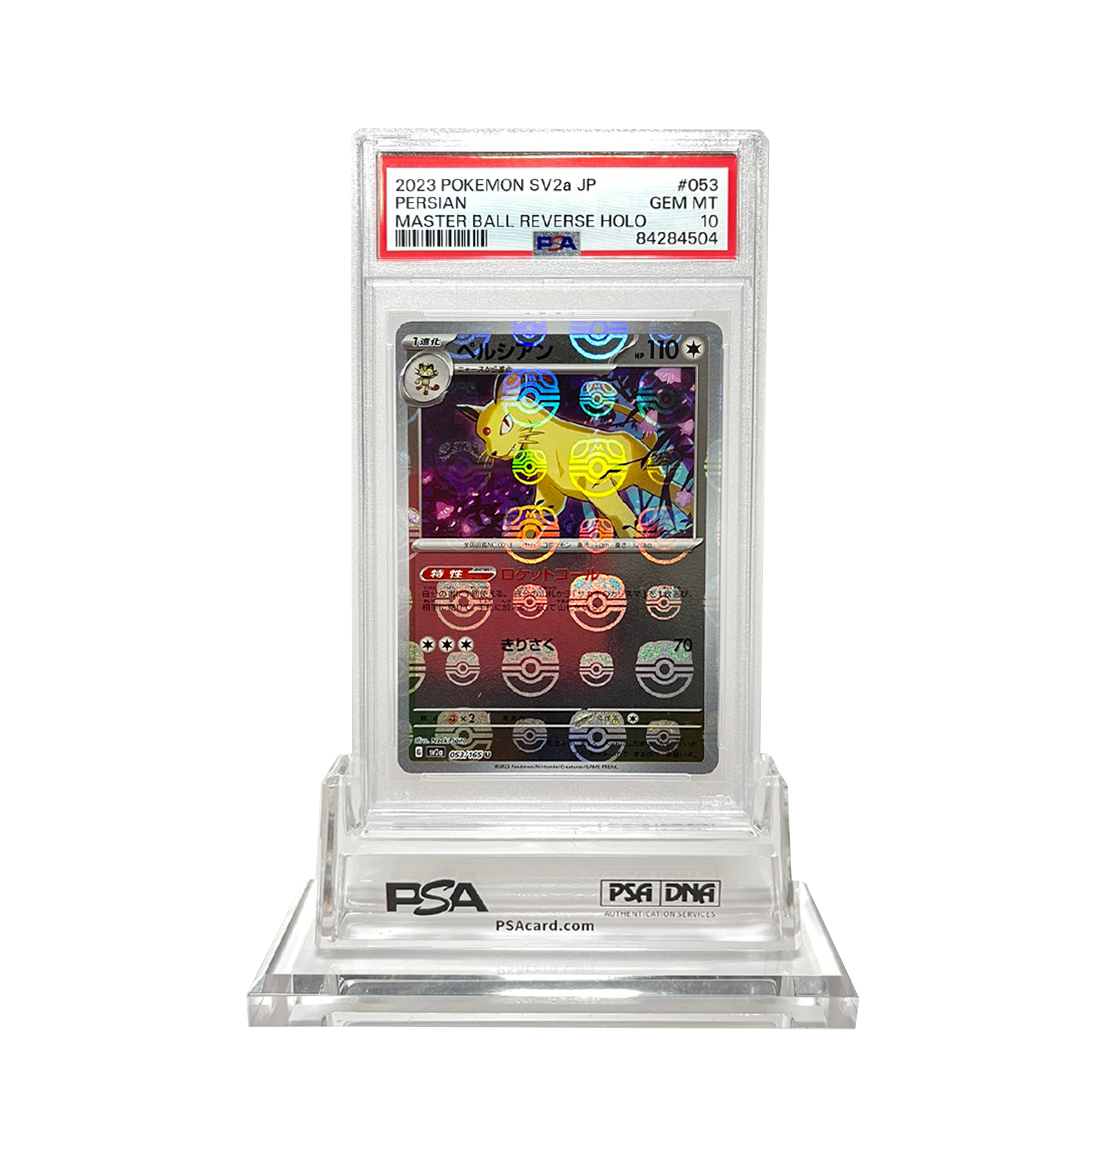 PSA 10 Persian 053 Master ball Pokemon 151 SV2a Japanese Pokemon card